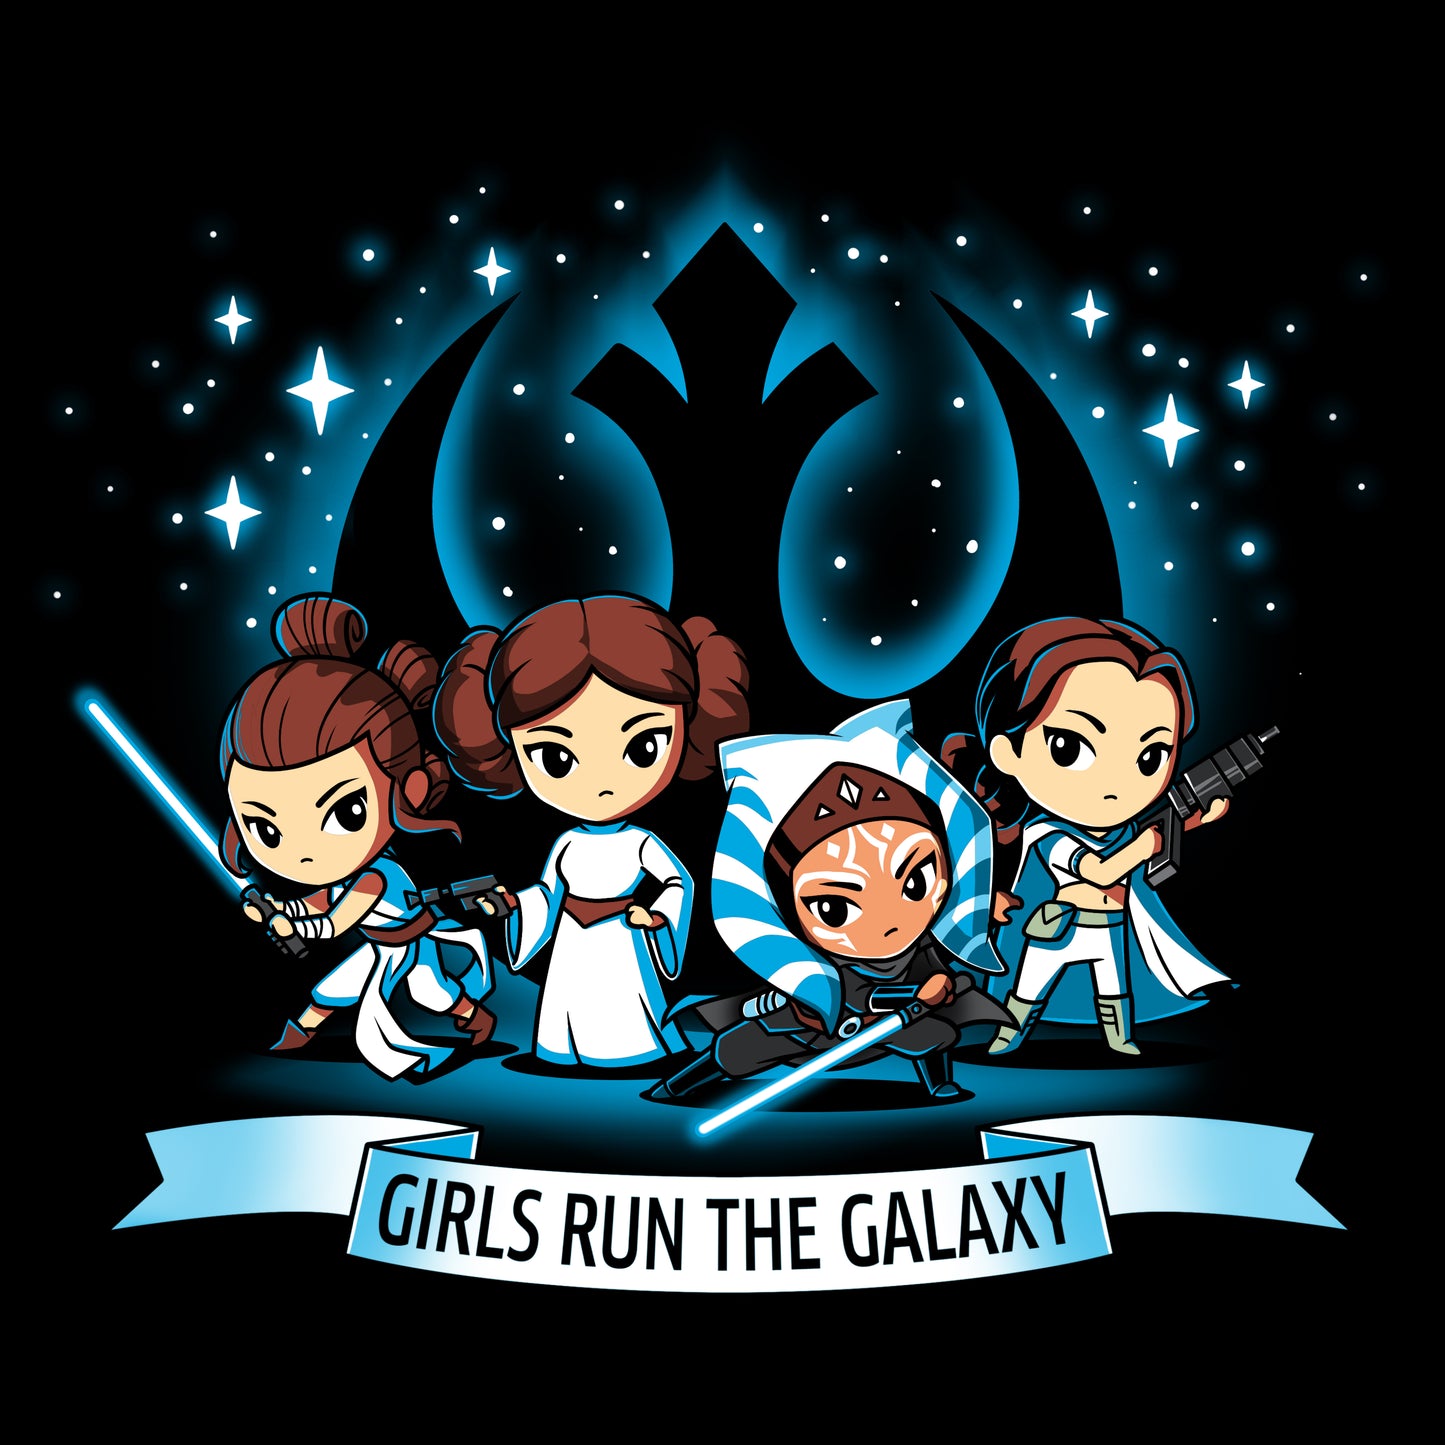 Collectible Girls Run The Galaxy t-shirt, licensed Star Wars merchandise.